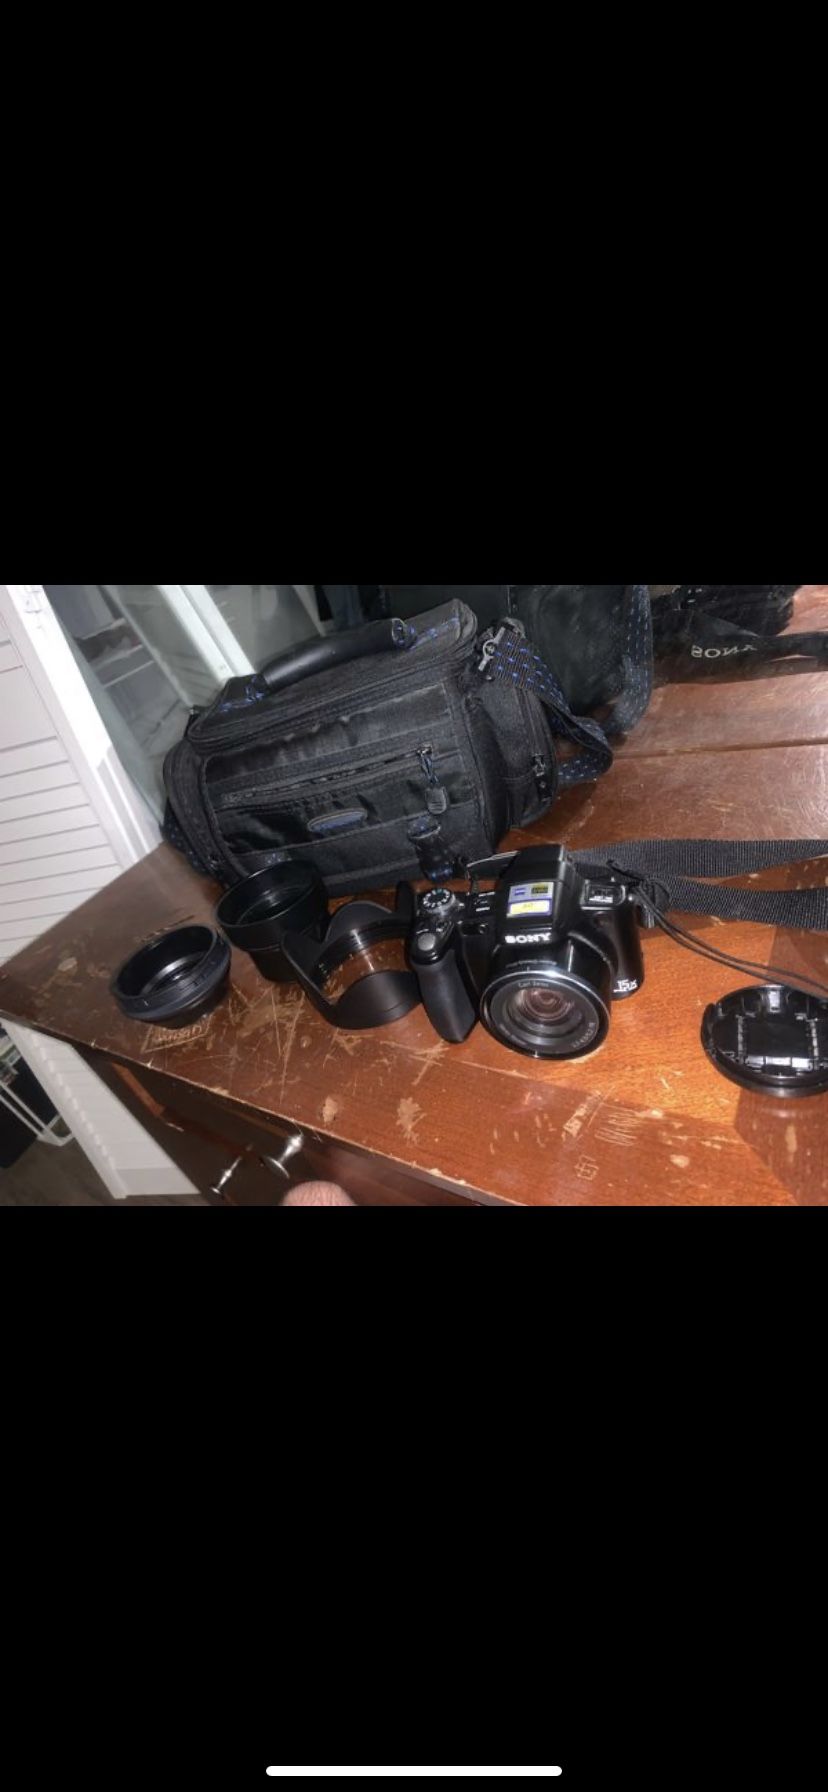 Sony cypher-shot DSC-H50 camera